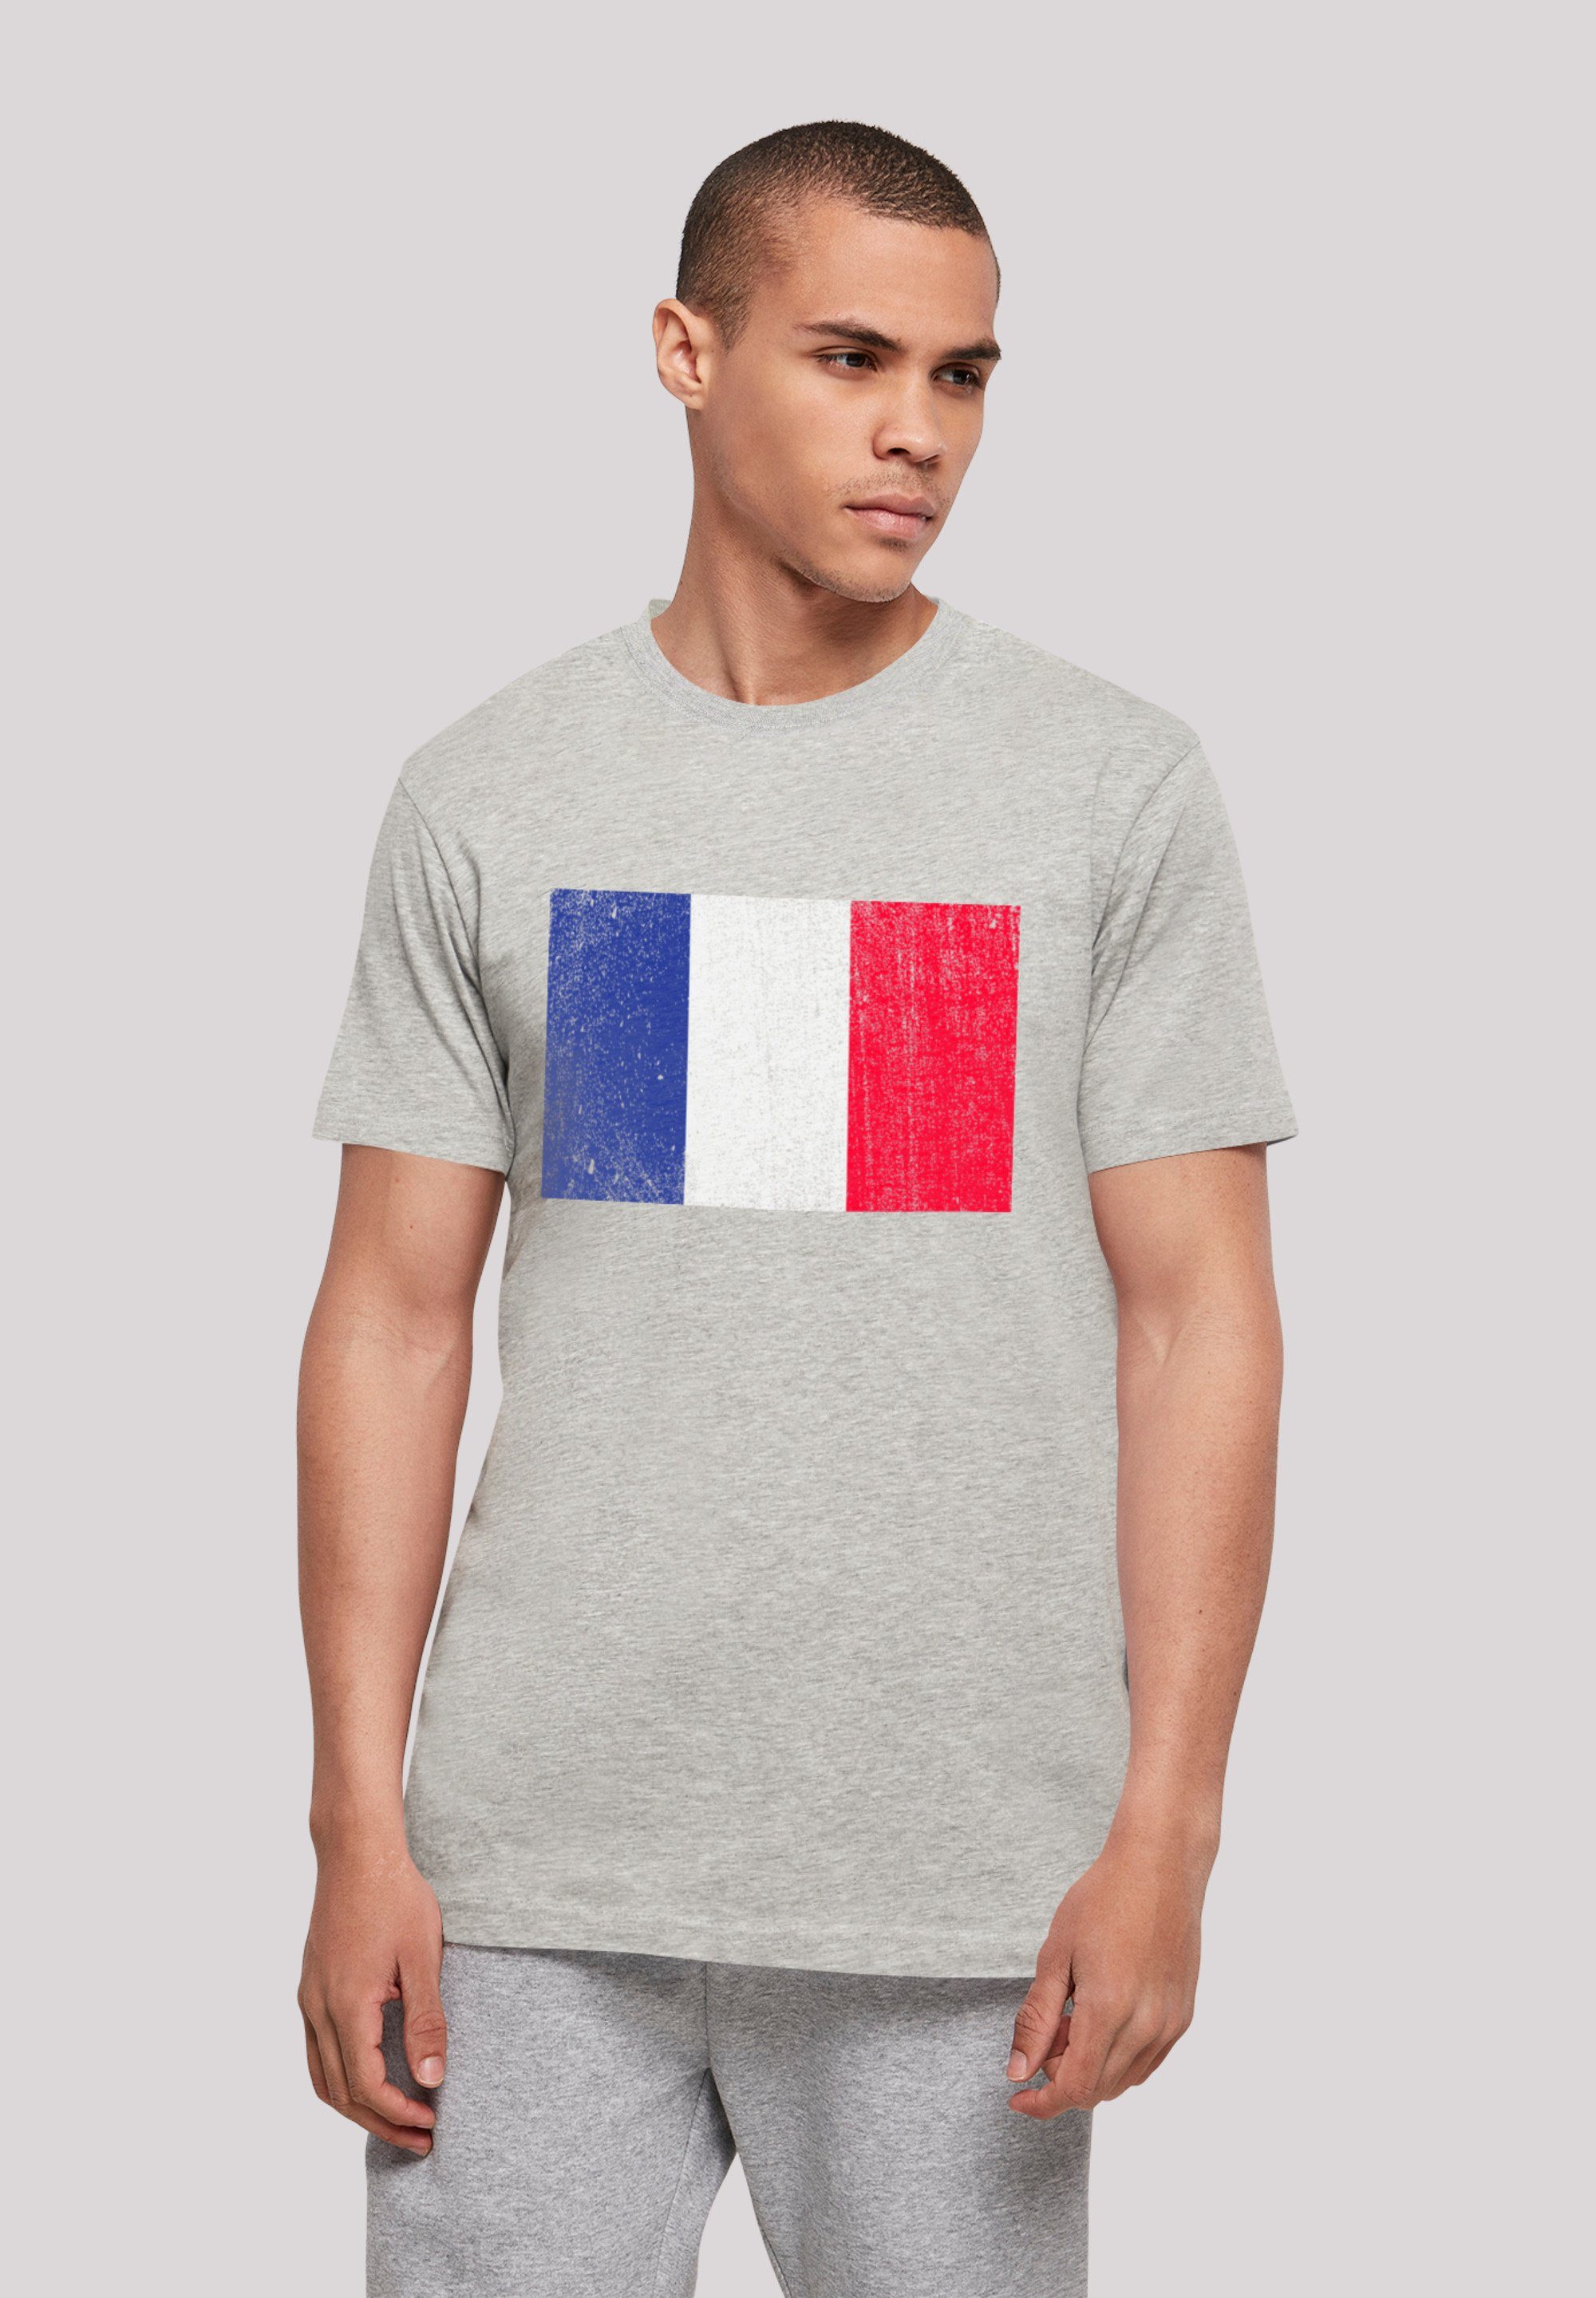 F4NT4STIC T-Shirt Frankreich Flagge France distressed Print heather grey